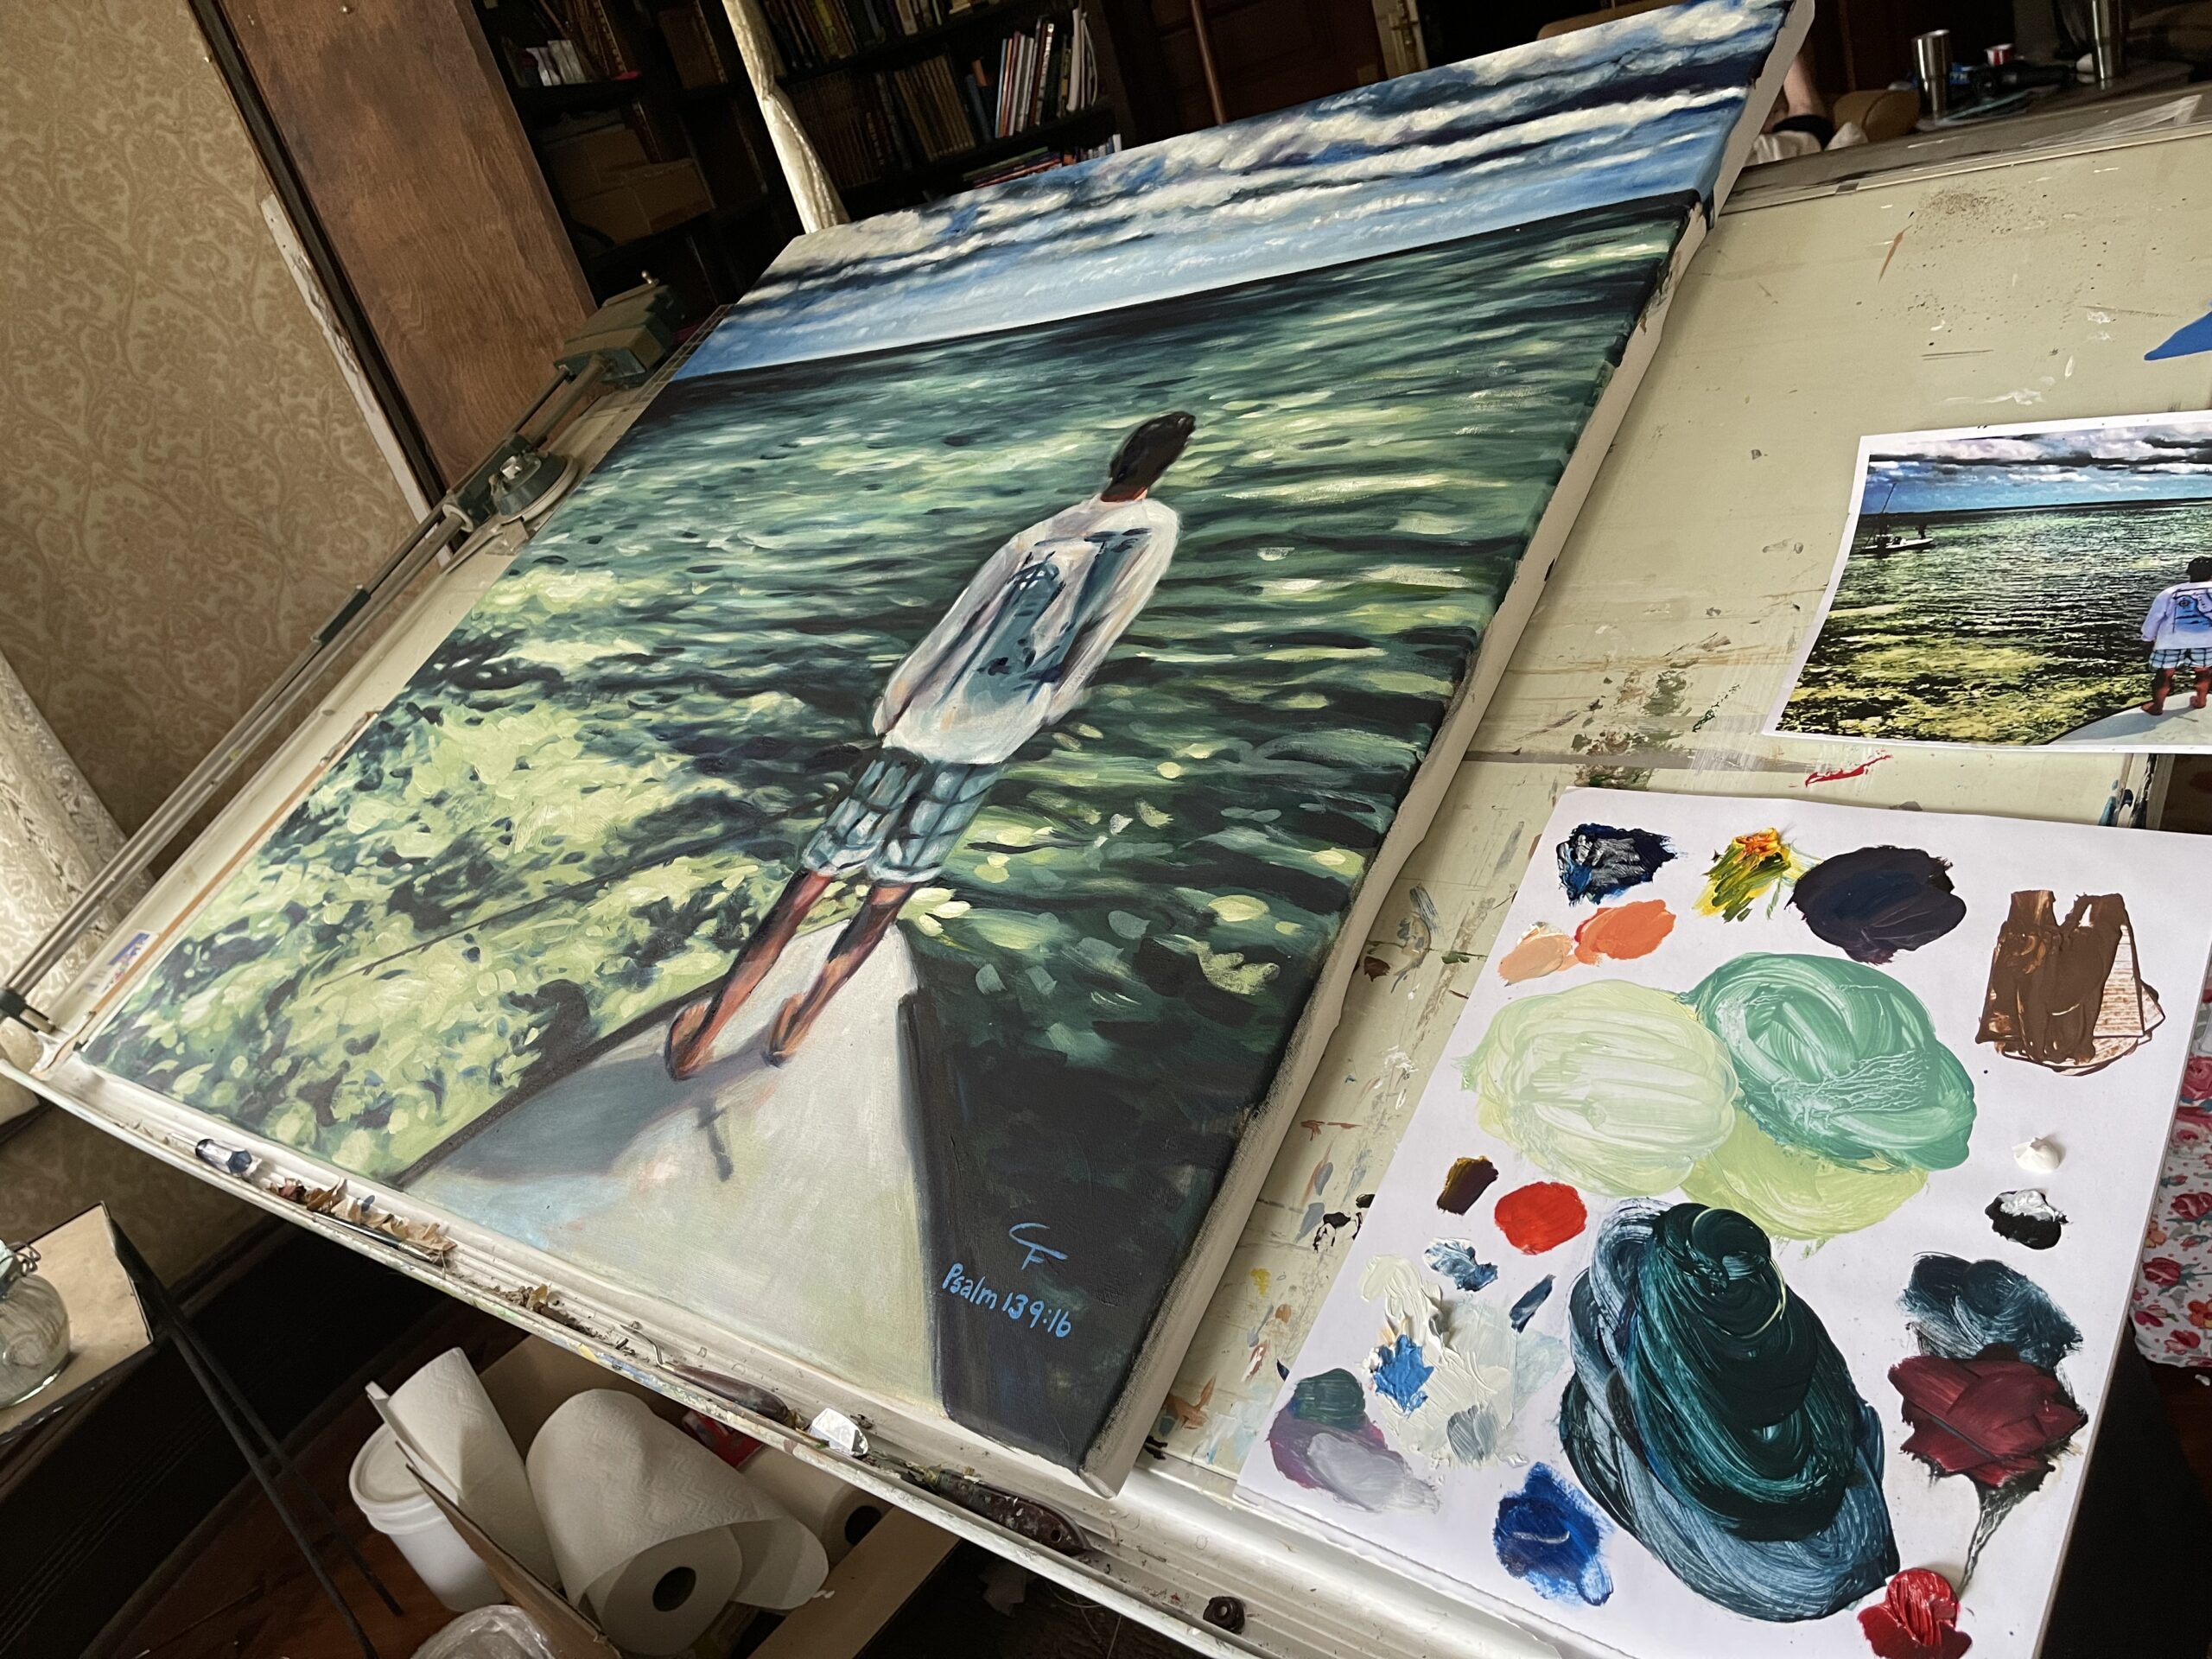 Oil Painted Landscape and Portrait of son on boat Biloxi MS by Carol Ferguson Art